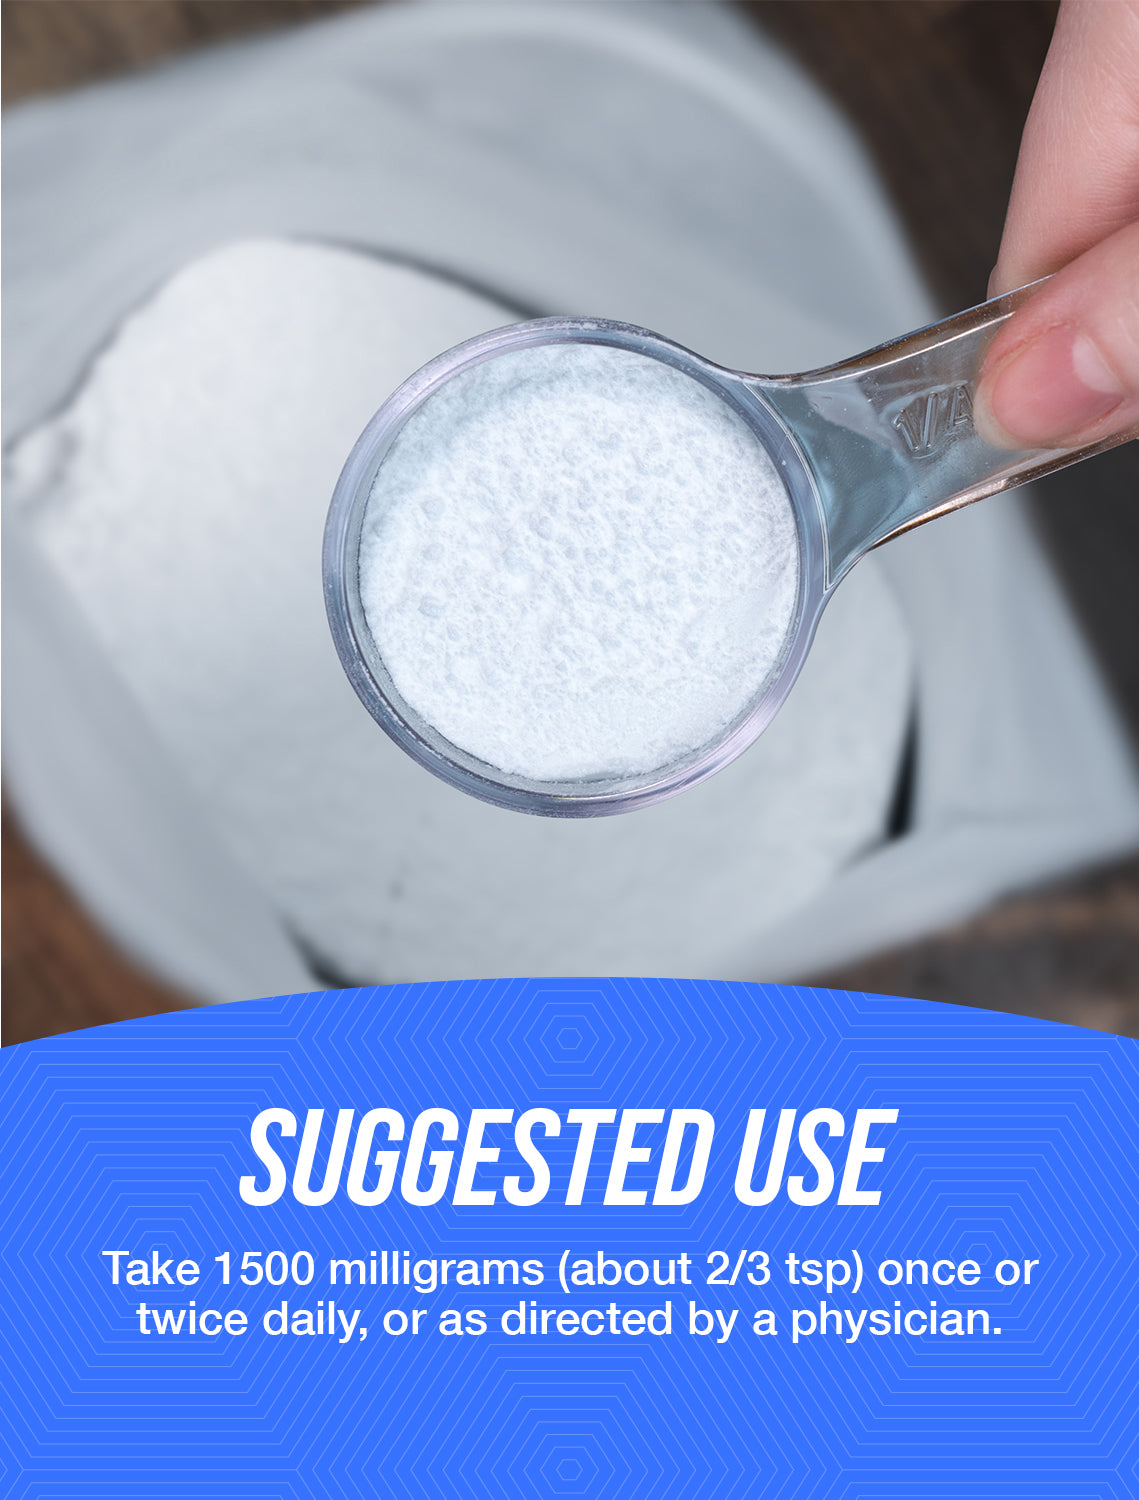 Calcium lactate powder suggested use image